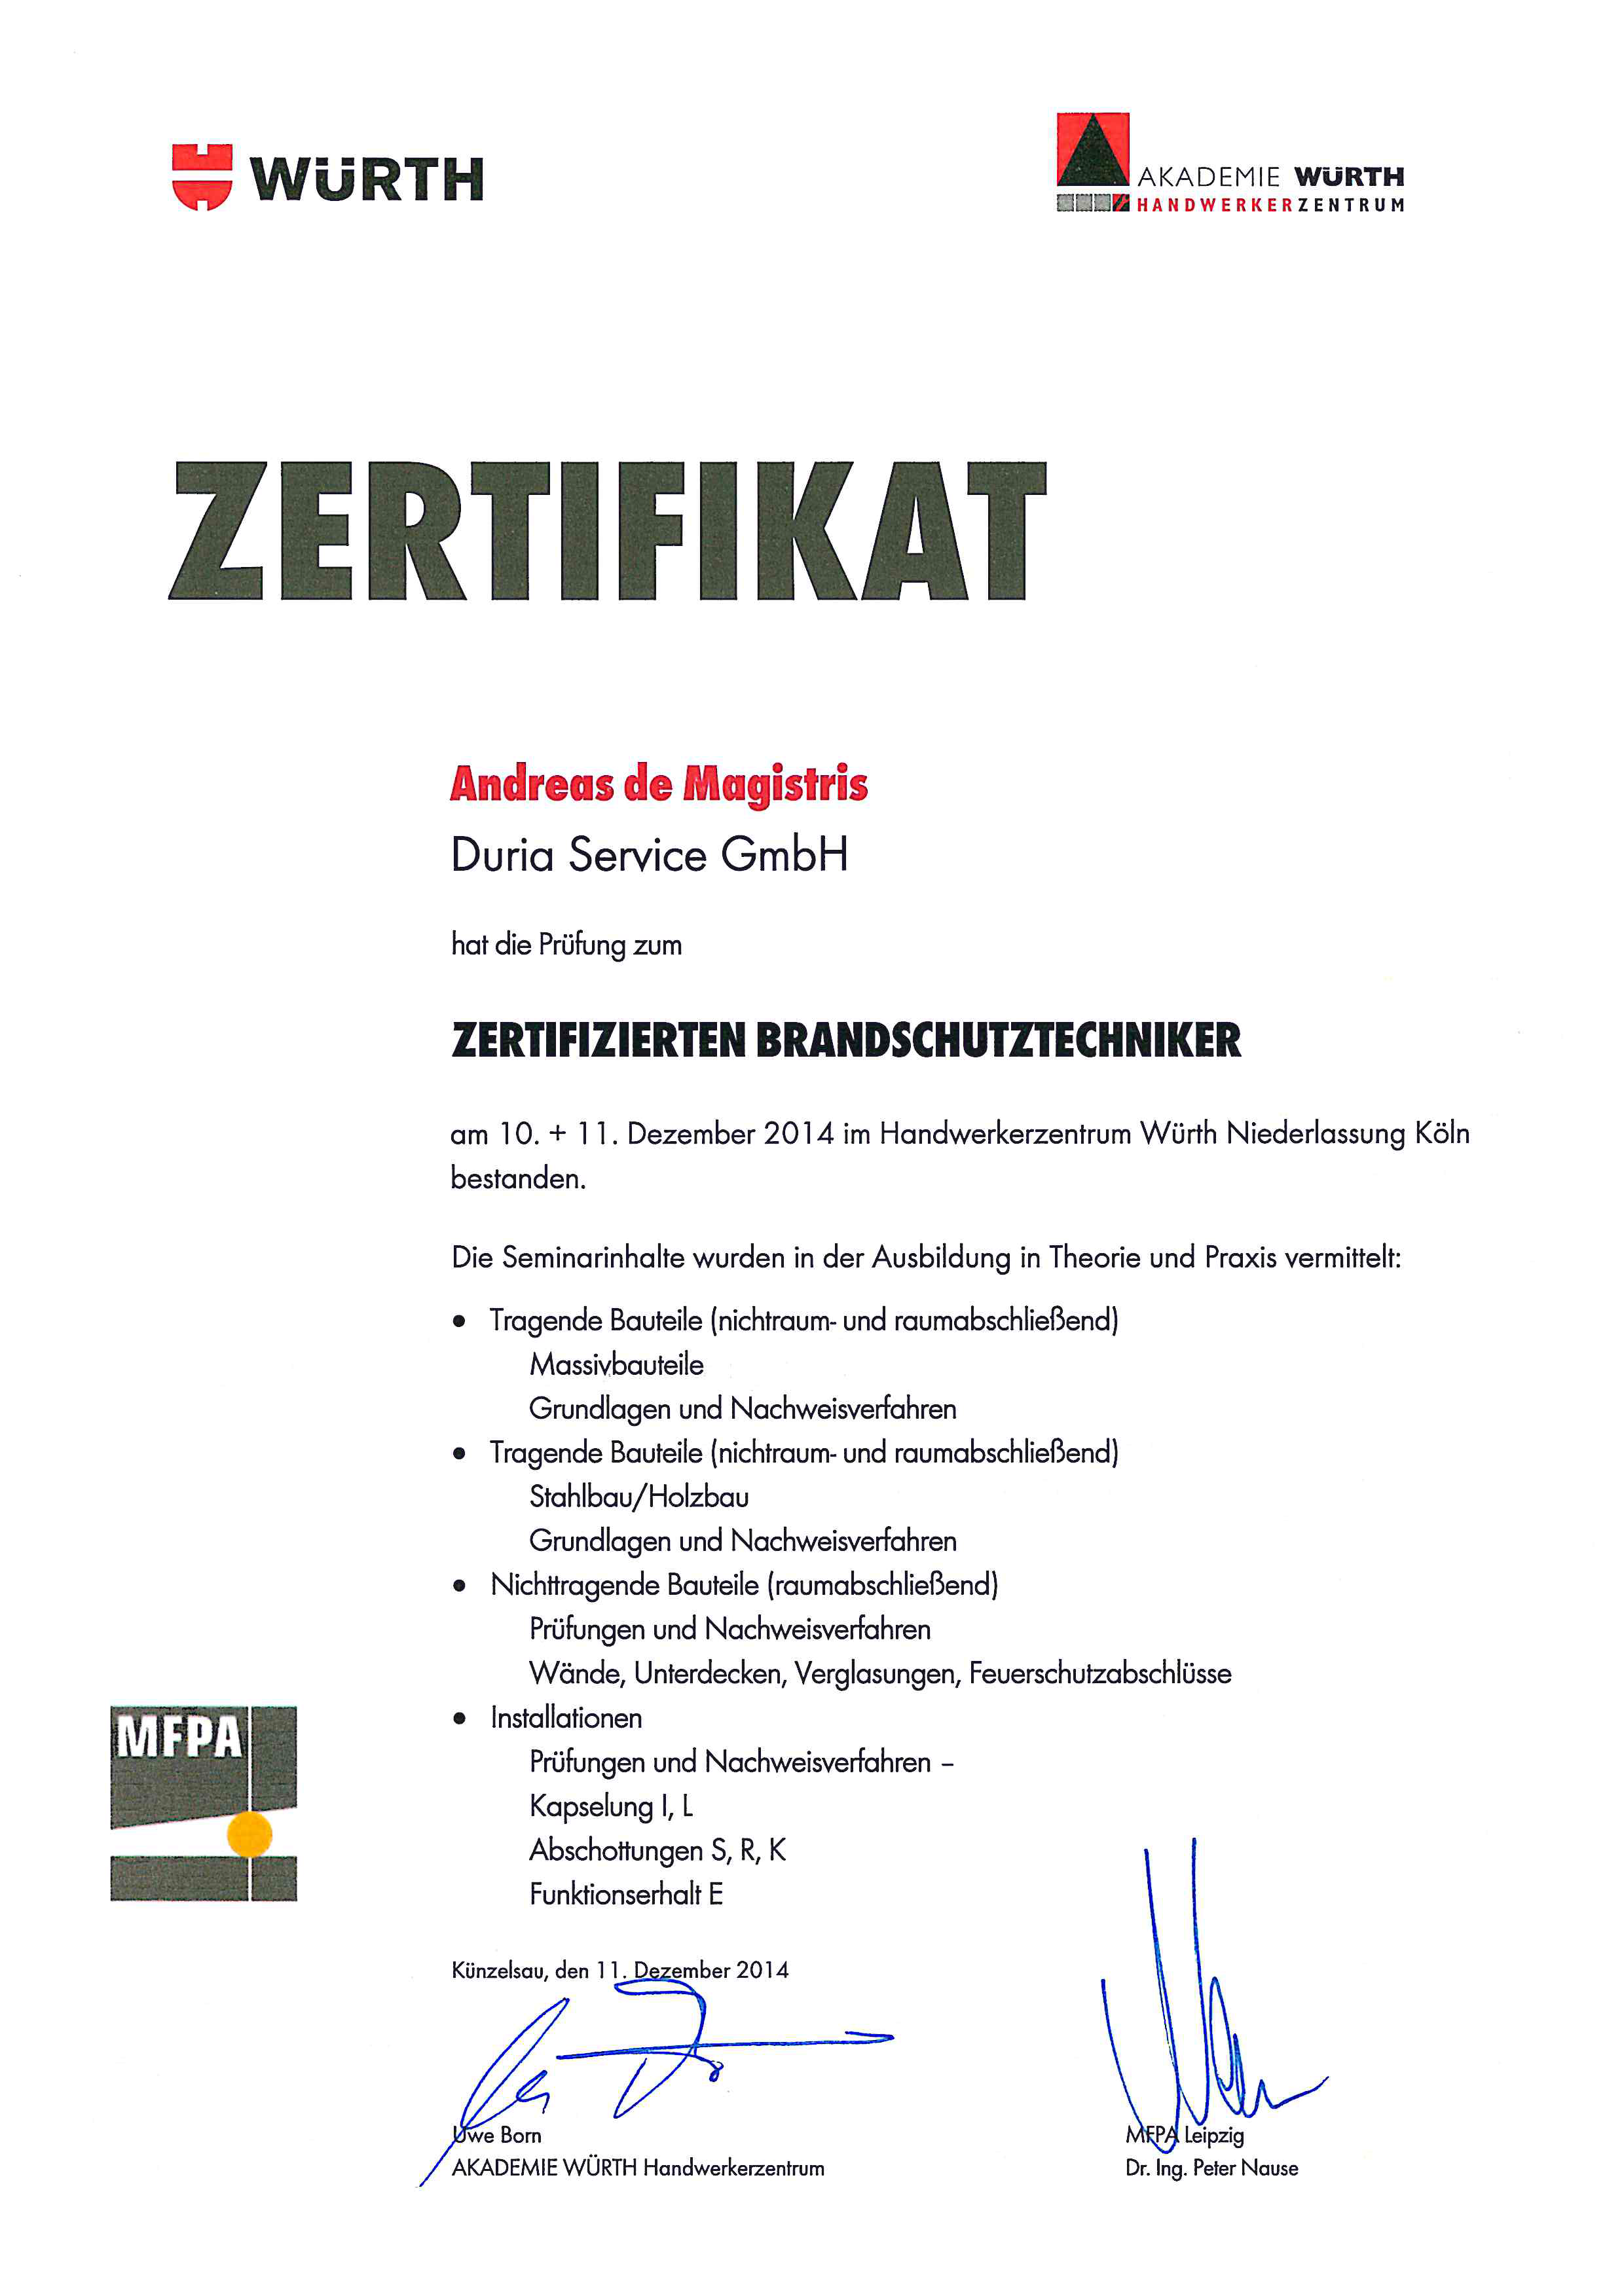 Zertifikat Würth Brandschutztechniker